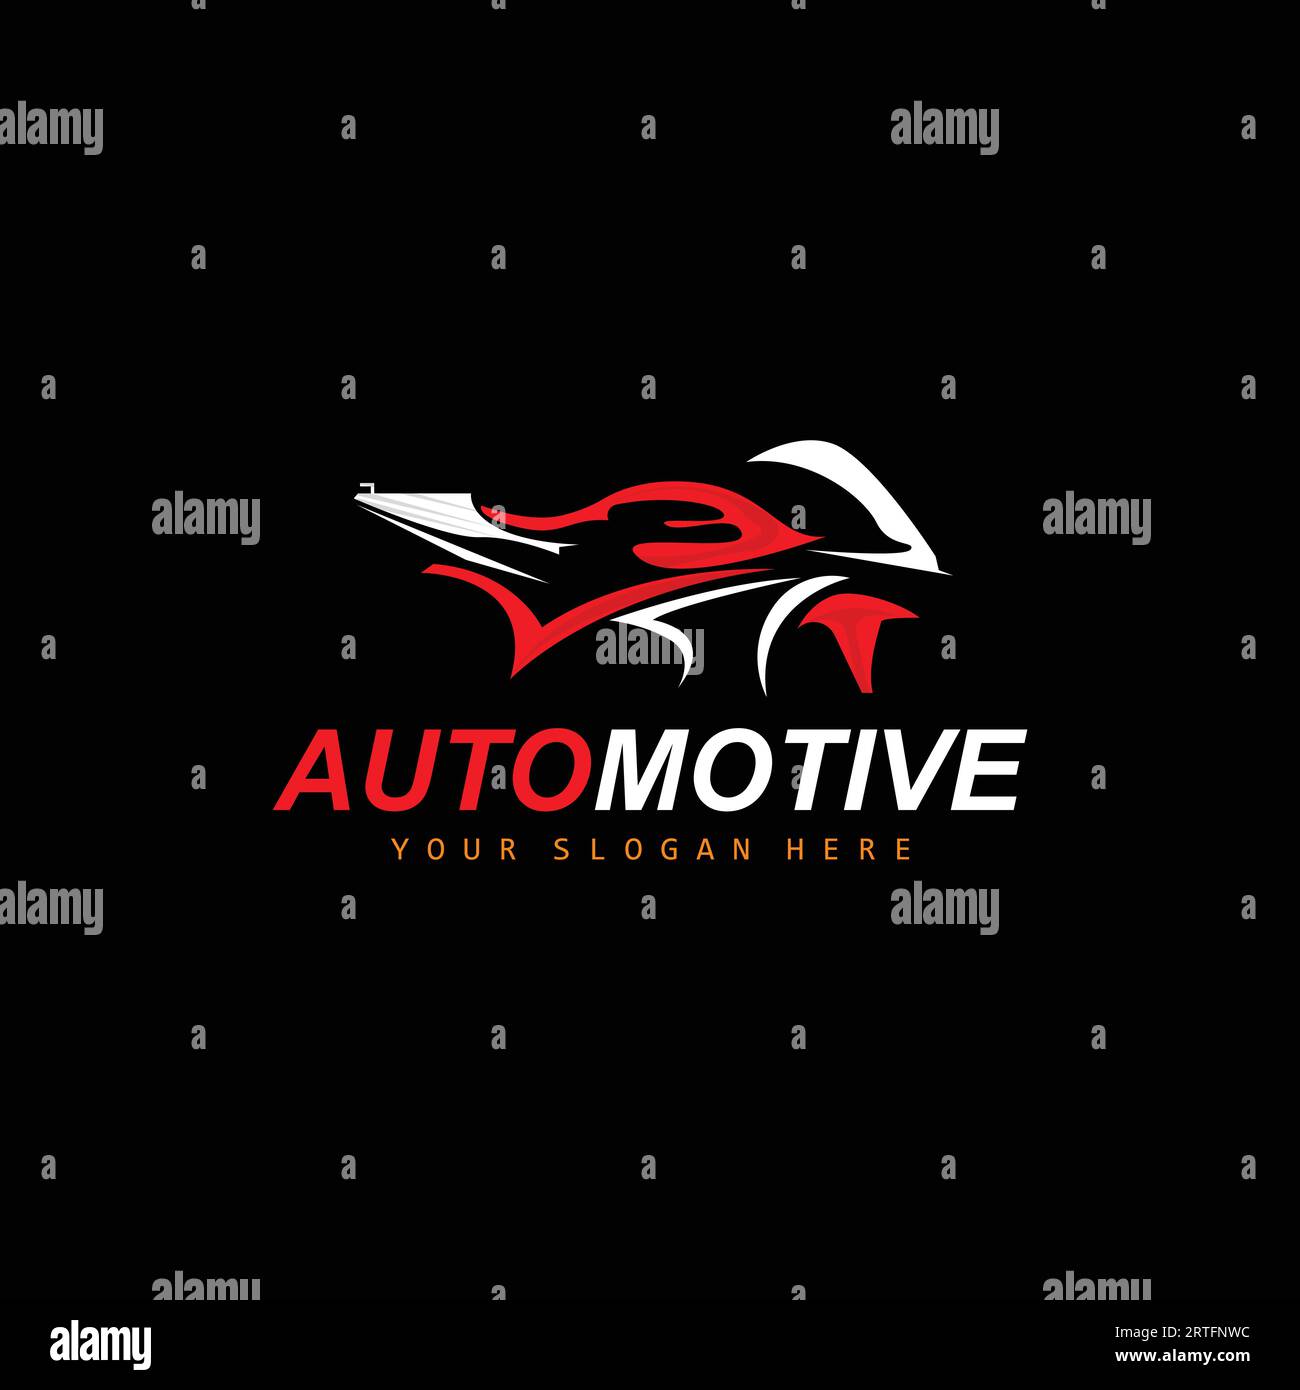 Motorcycle Logo, MotoSport Vehicle Vector, Design For, Automotive, Motorcycle Costume Workshop, Motorcycle Repair, Product Brand, Motogp Stock Vector